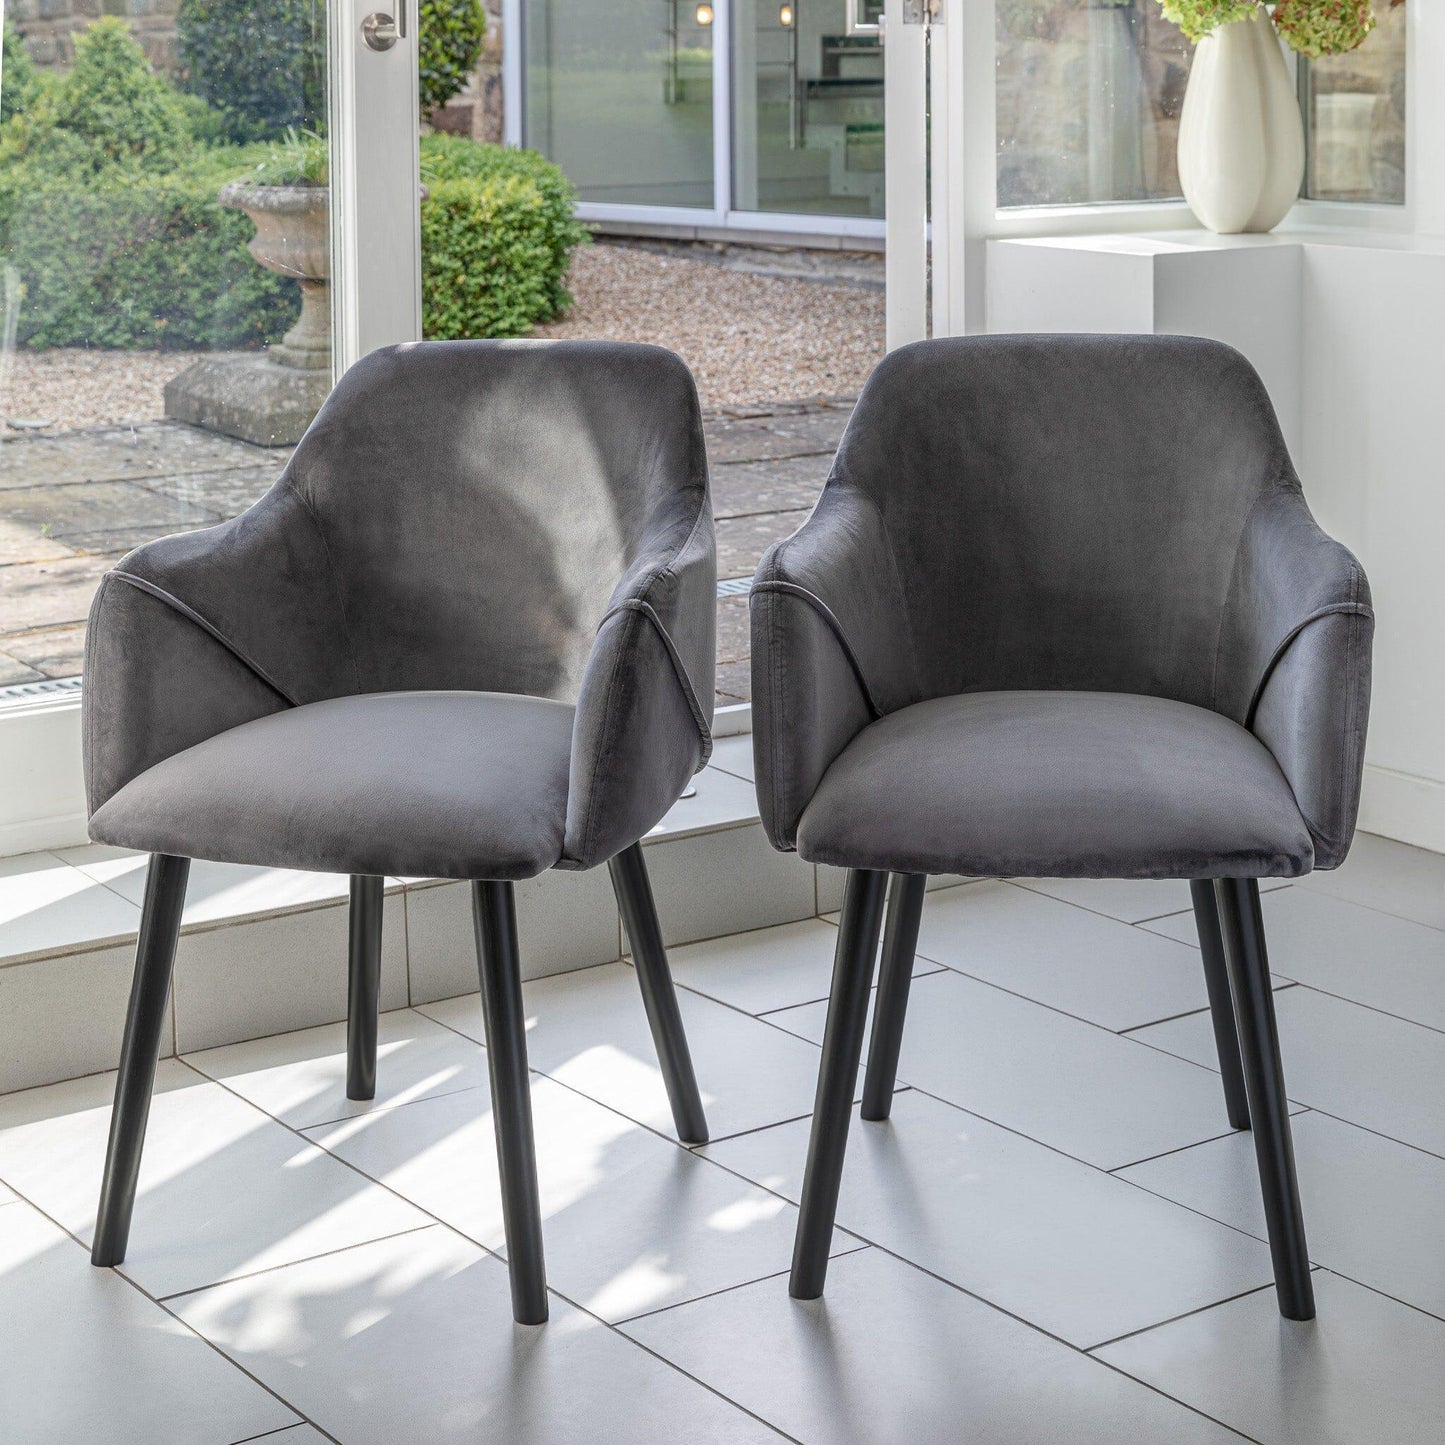 Freya armchairs - set of 2 - grey velvet and black